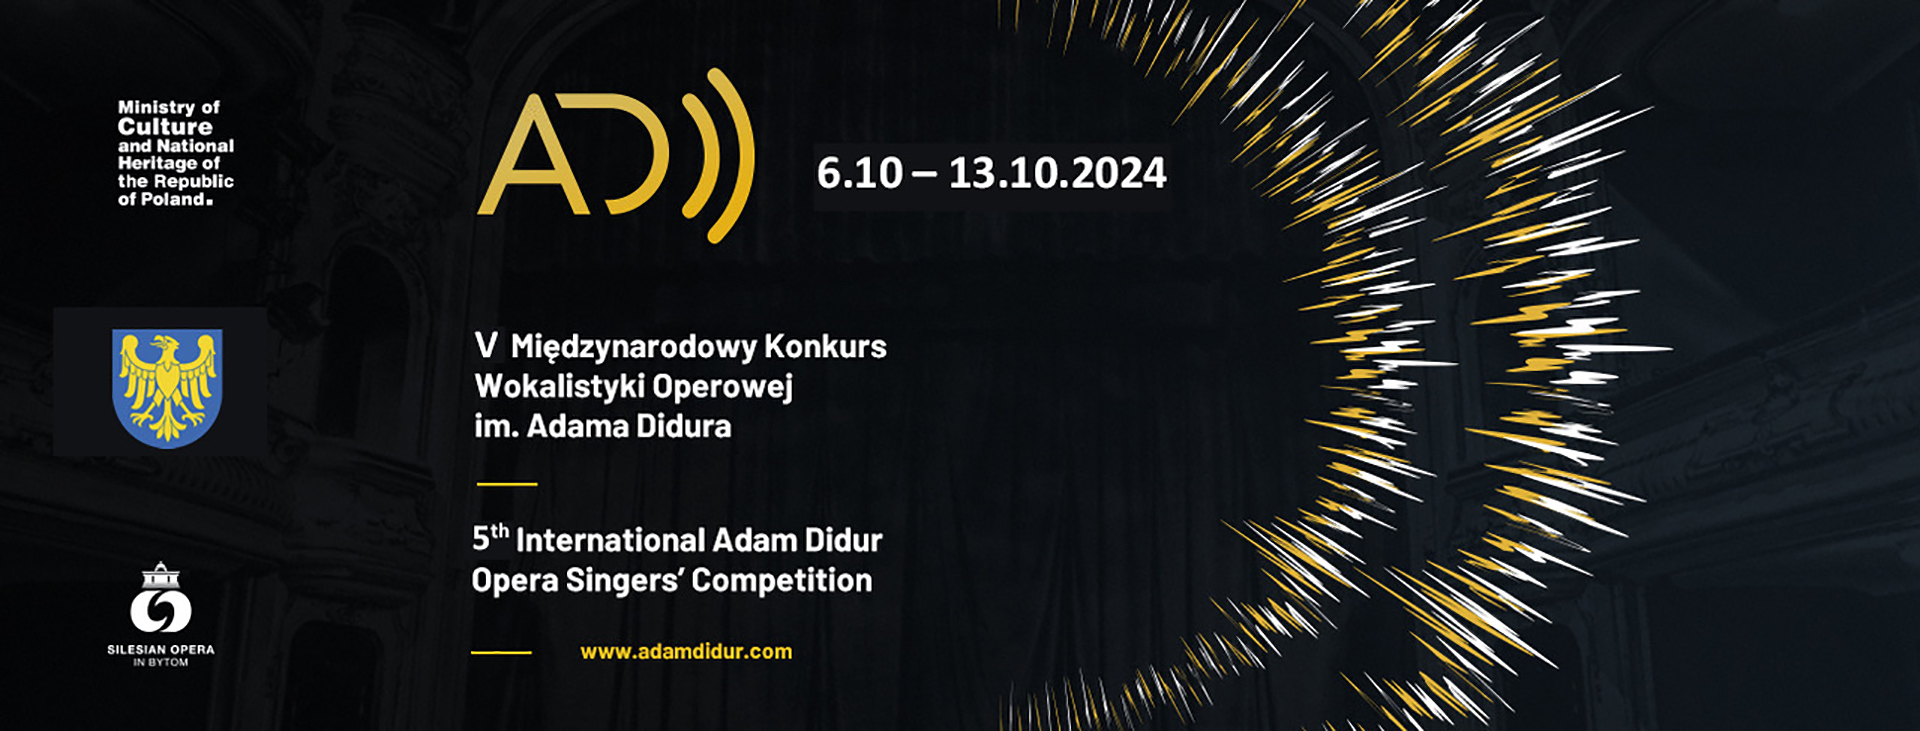 Jubilee edition of International Adam Didur Opera Singers’ Competition on October 6-13